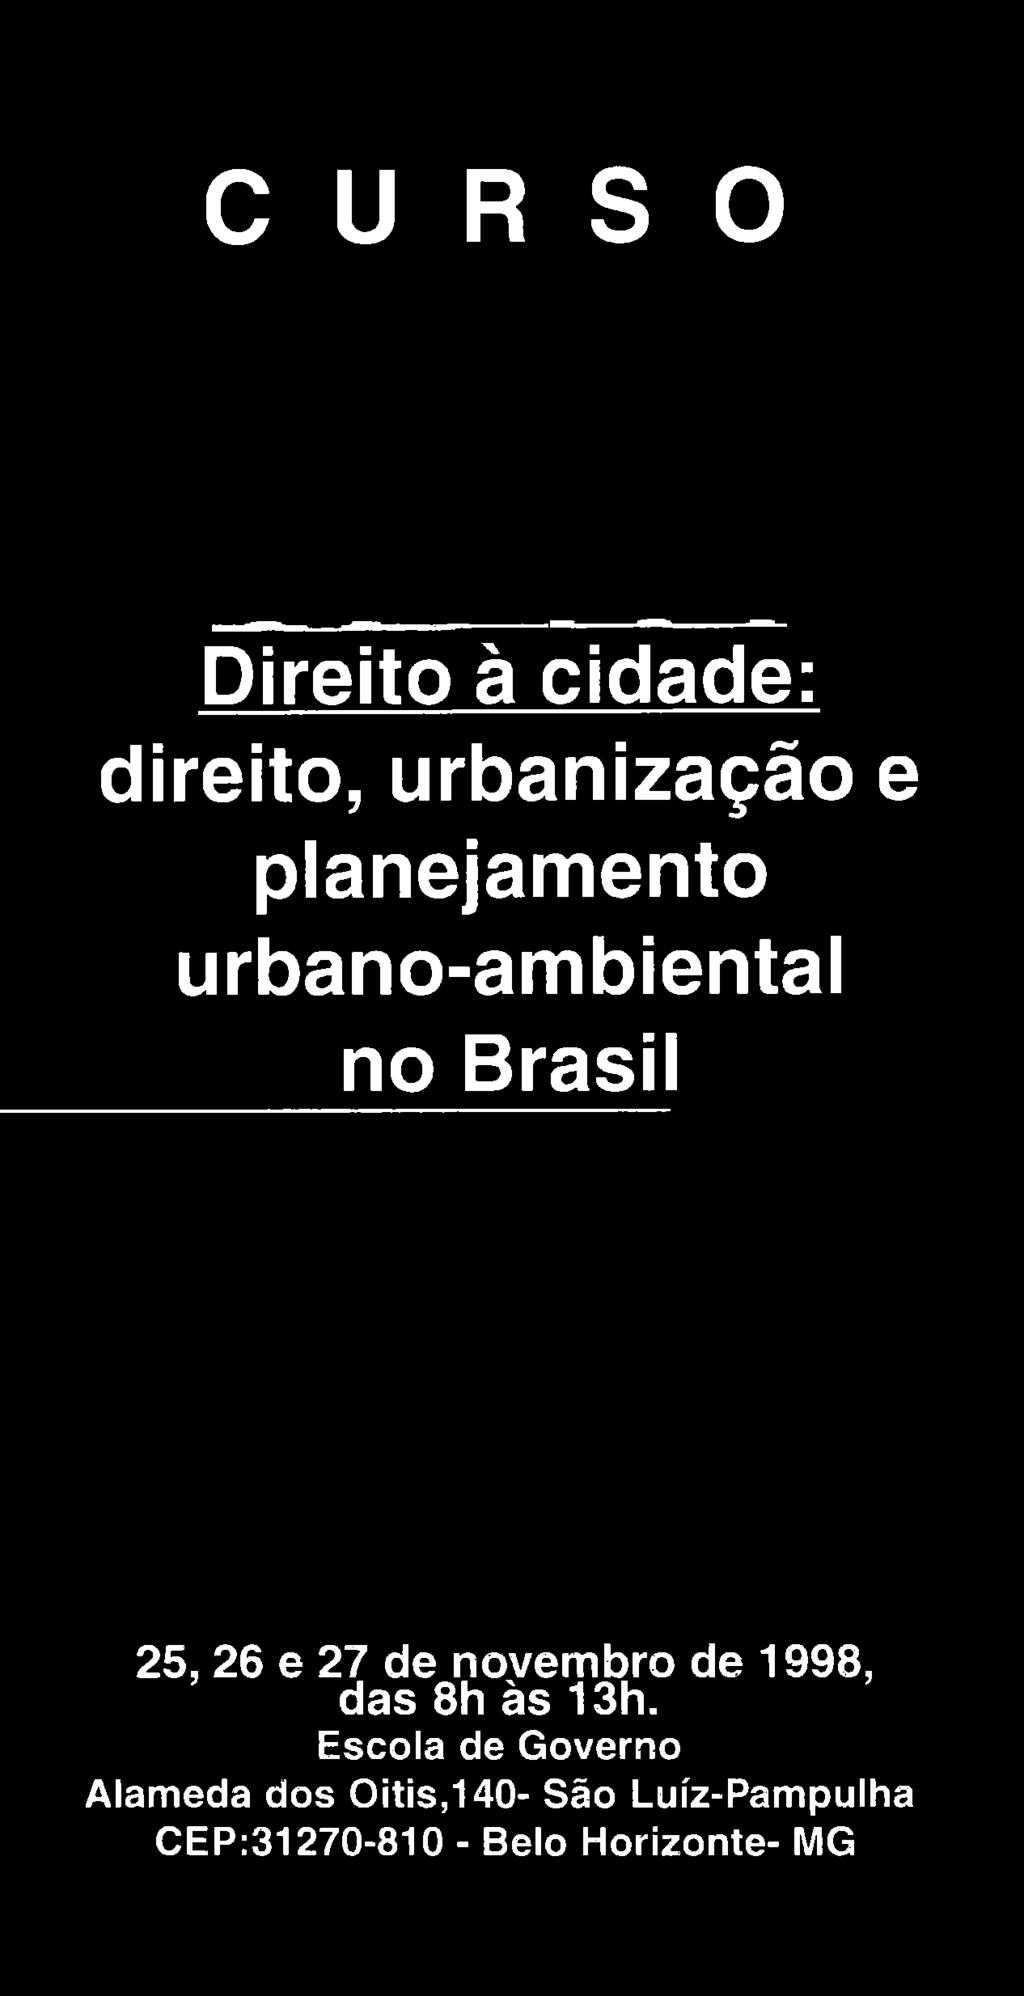 urbano-ambiental no Brasil 25, 26 e